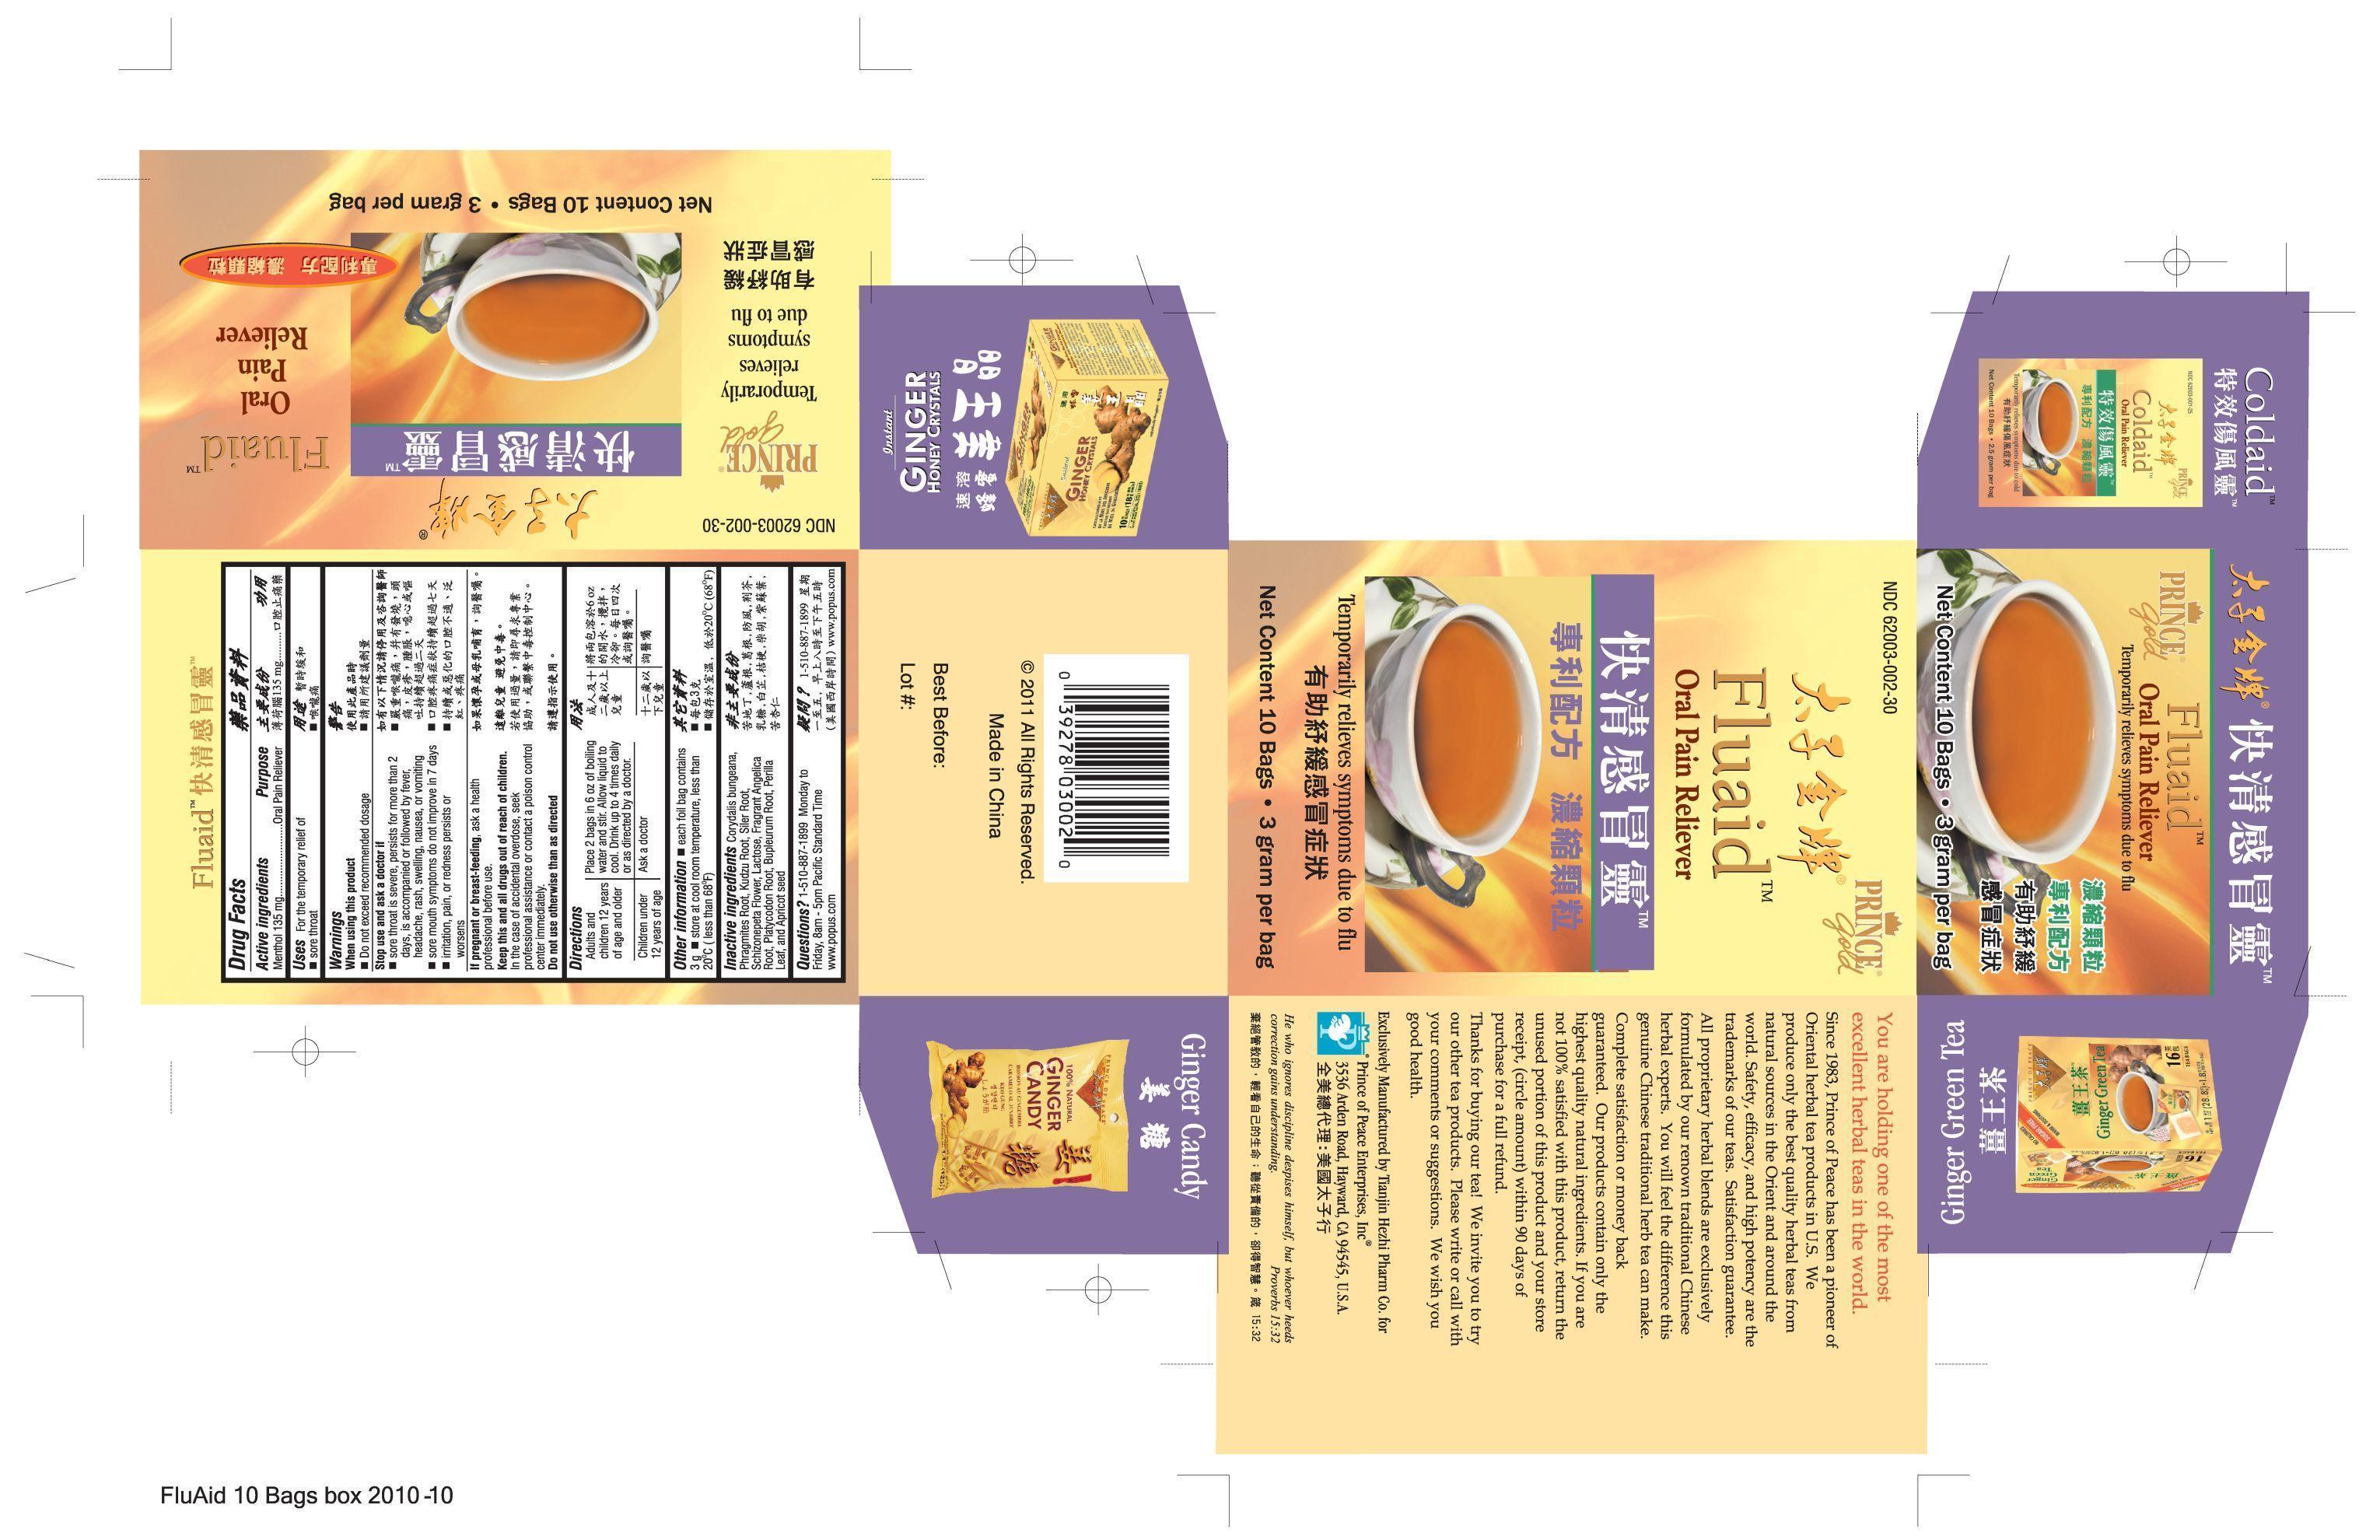 Image of carton label